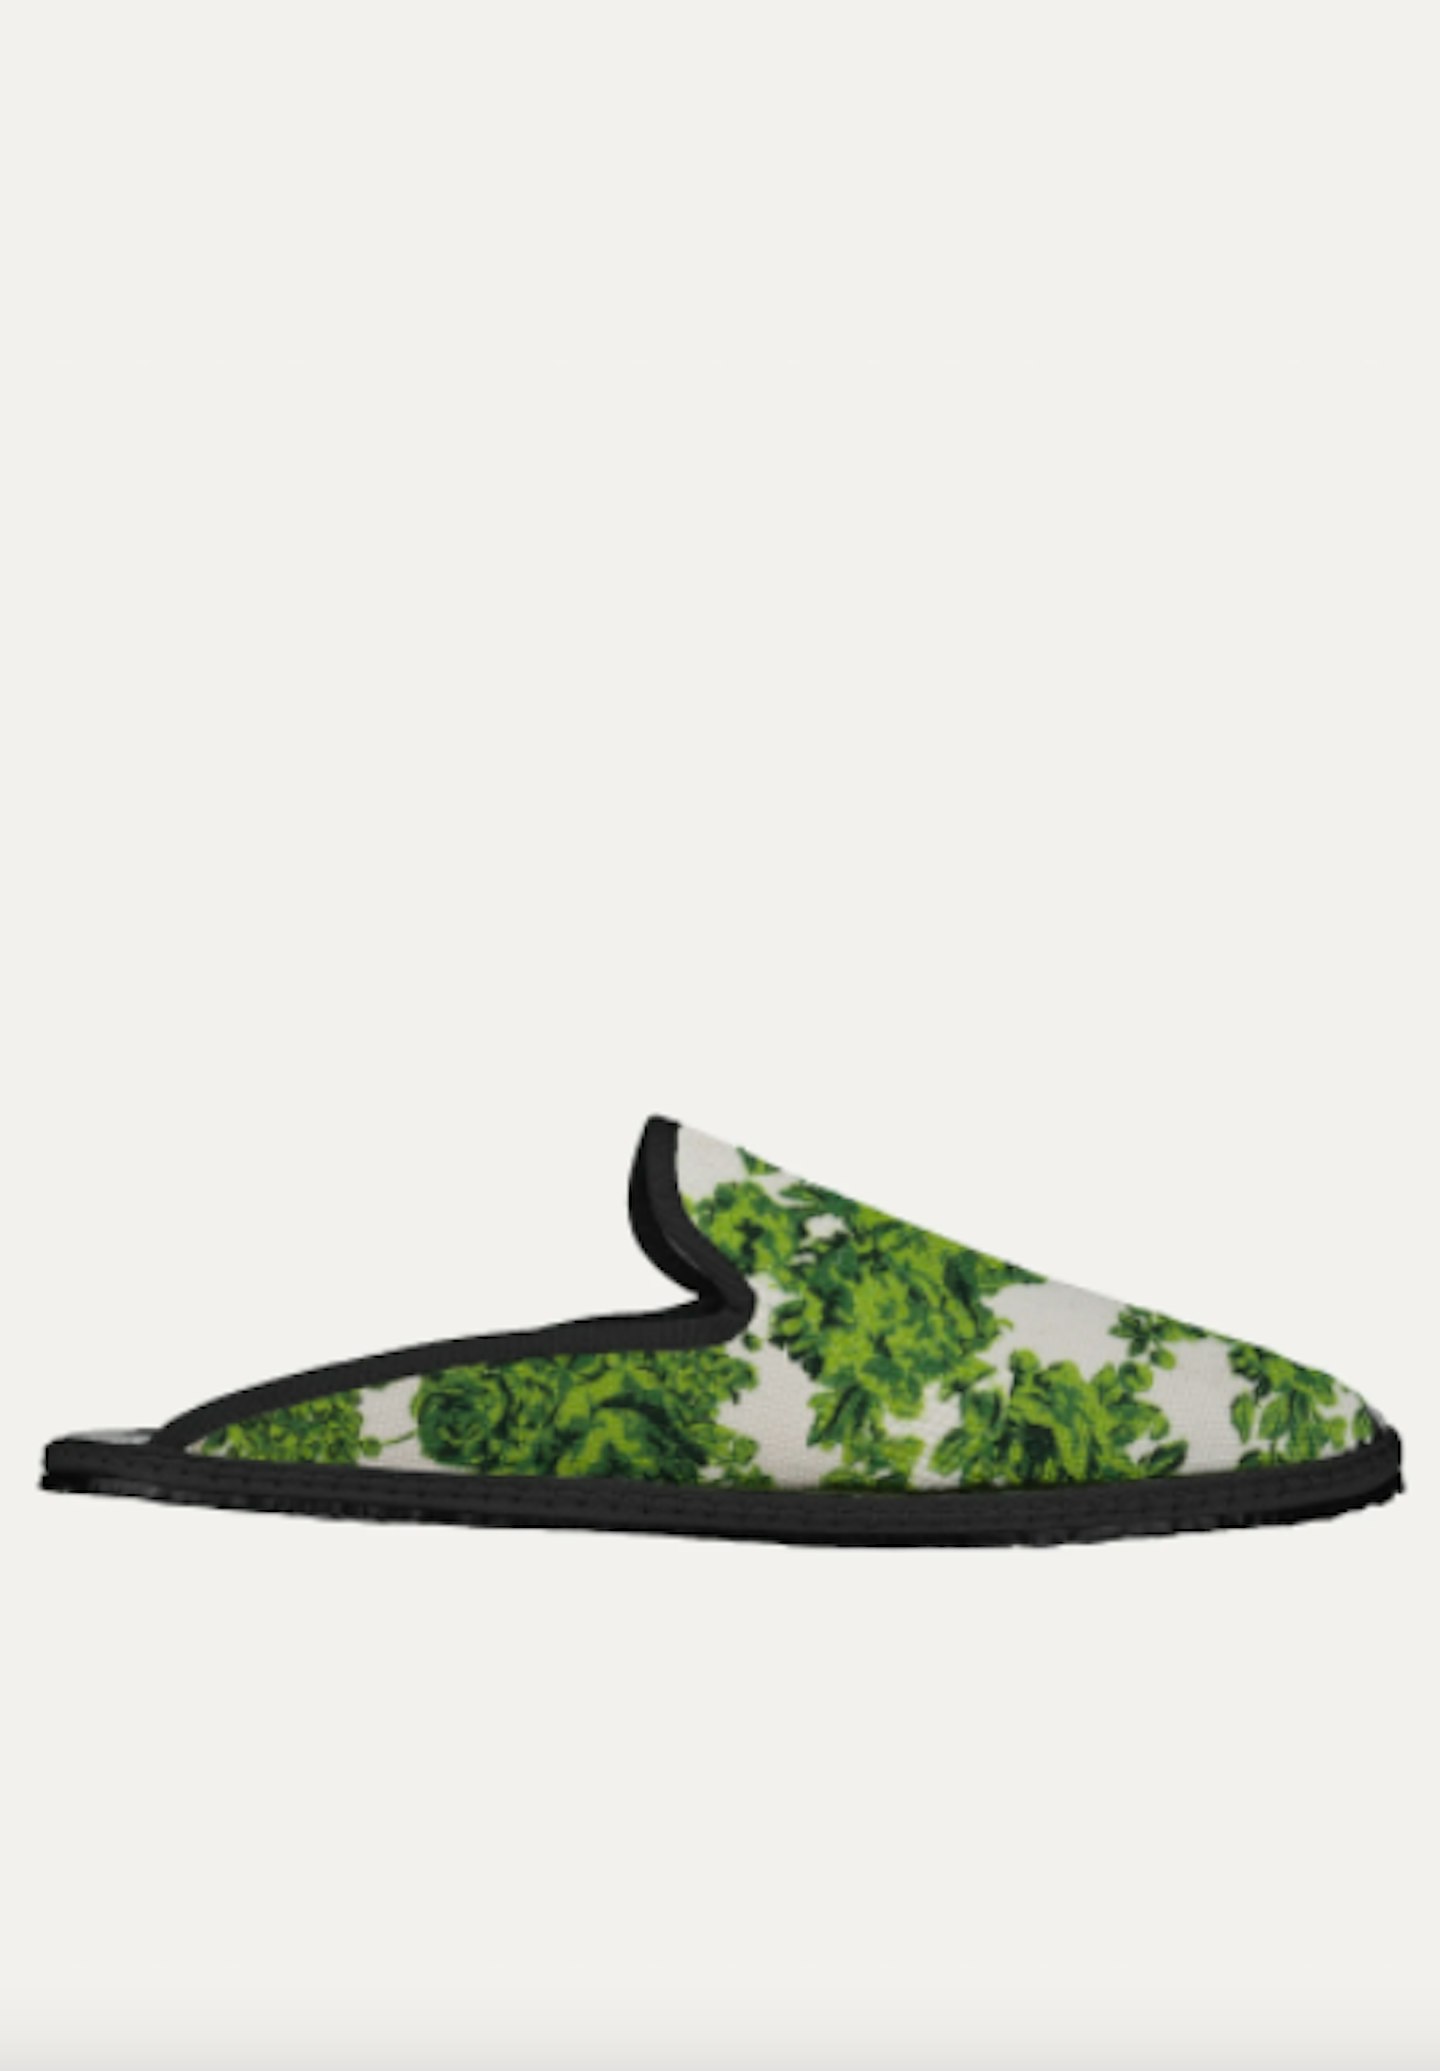 Sabot Shoe in Green Floral, £140